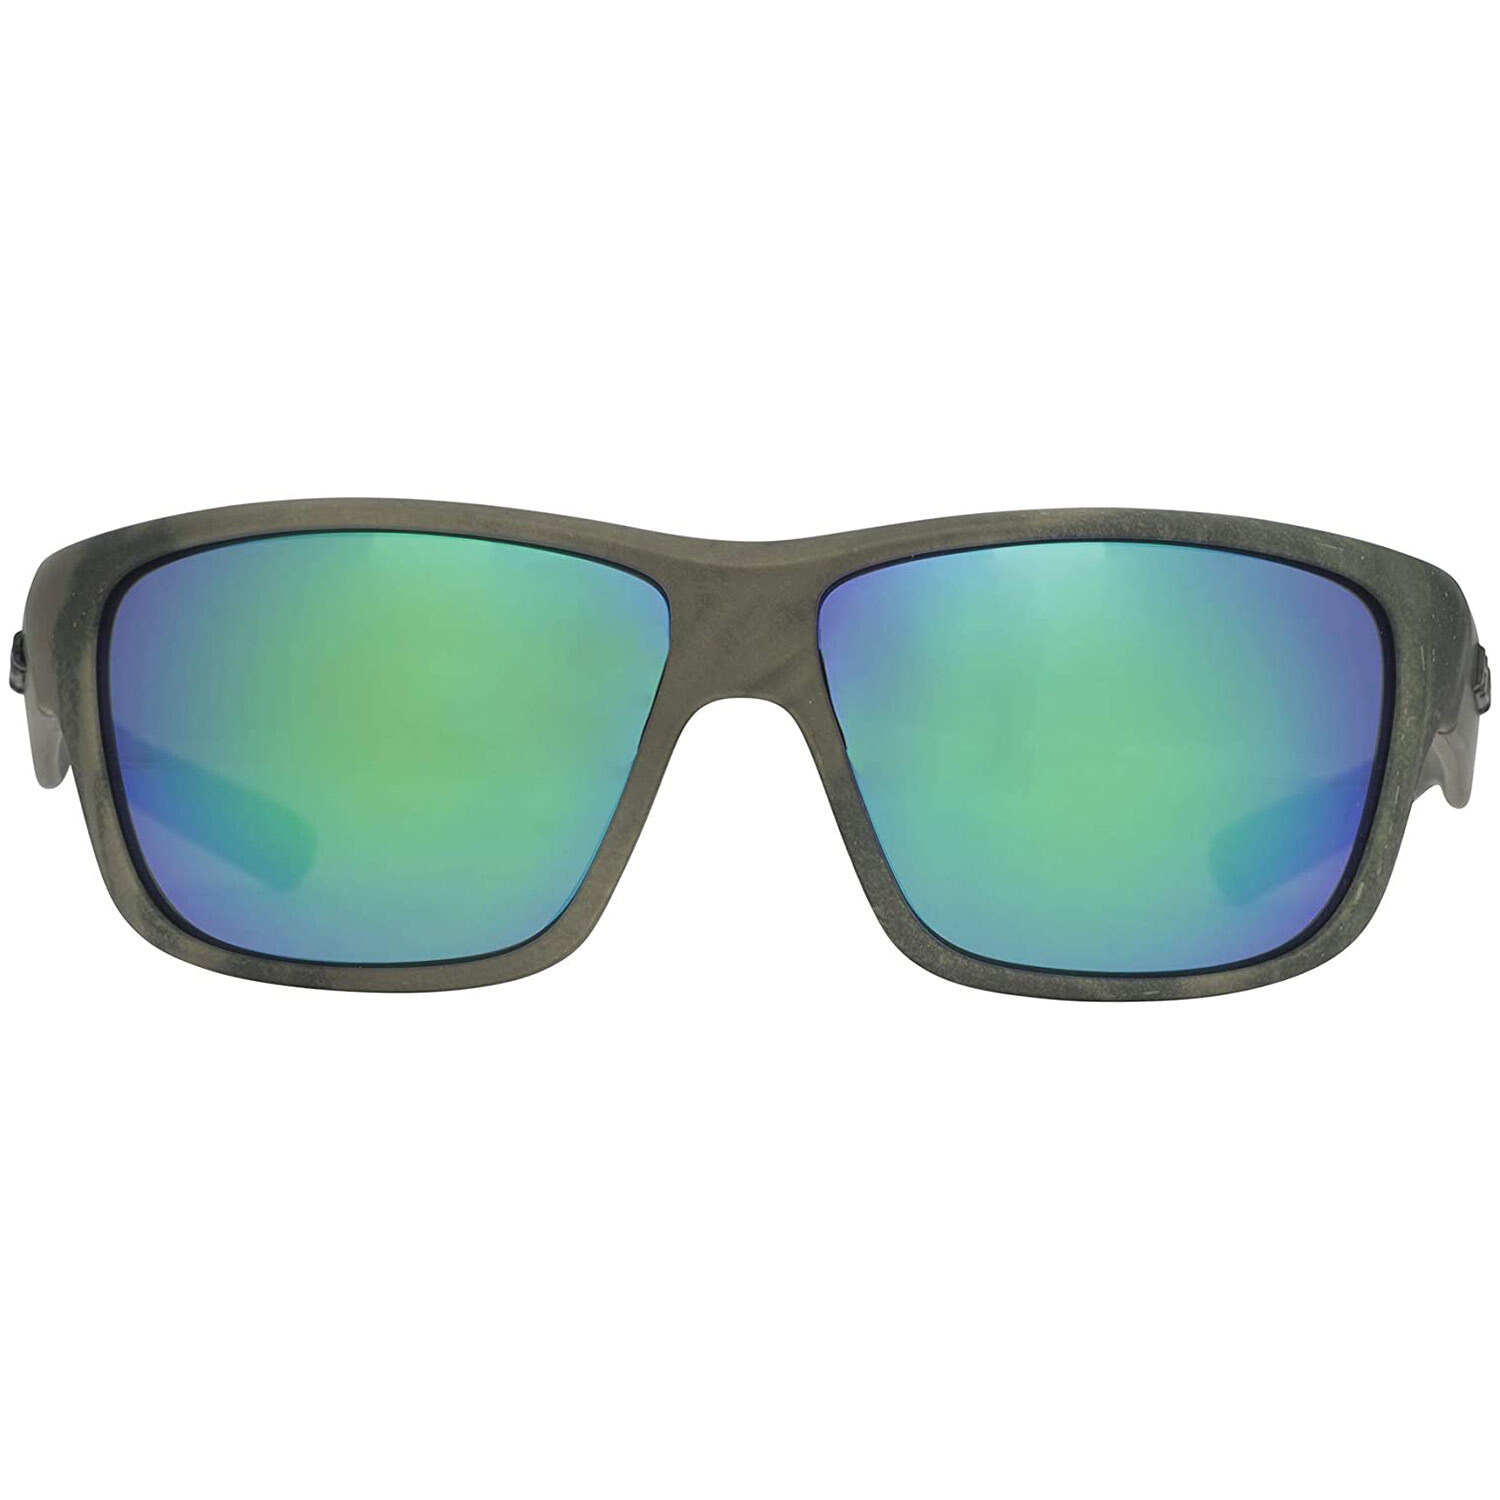 Huk Spar Sunglasses, Polarized Polycarbonate Lens, Performance Fishing  Eyewear, Gray Lens